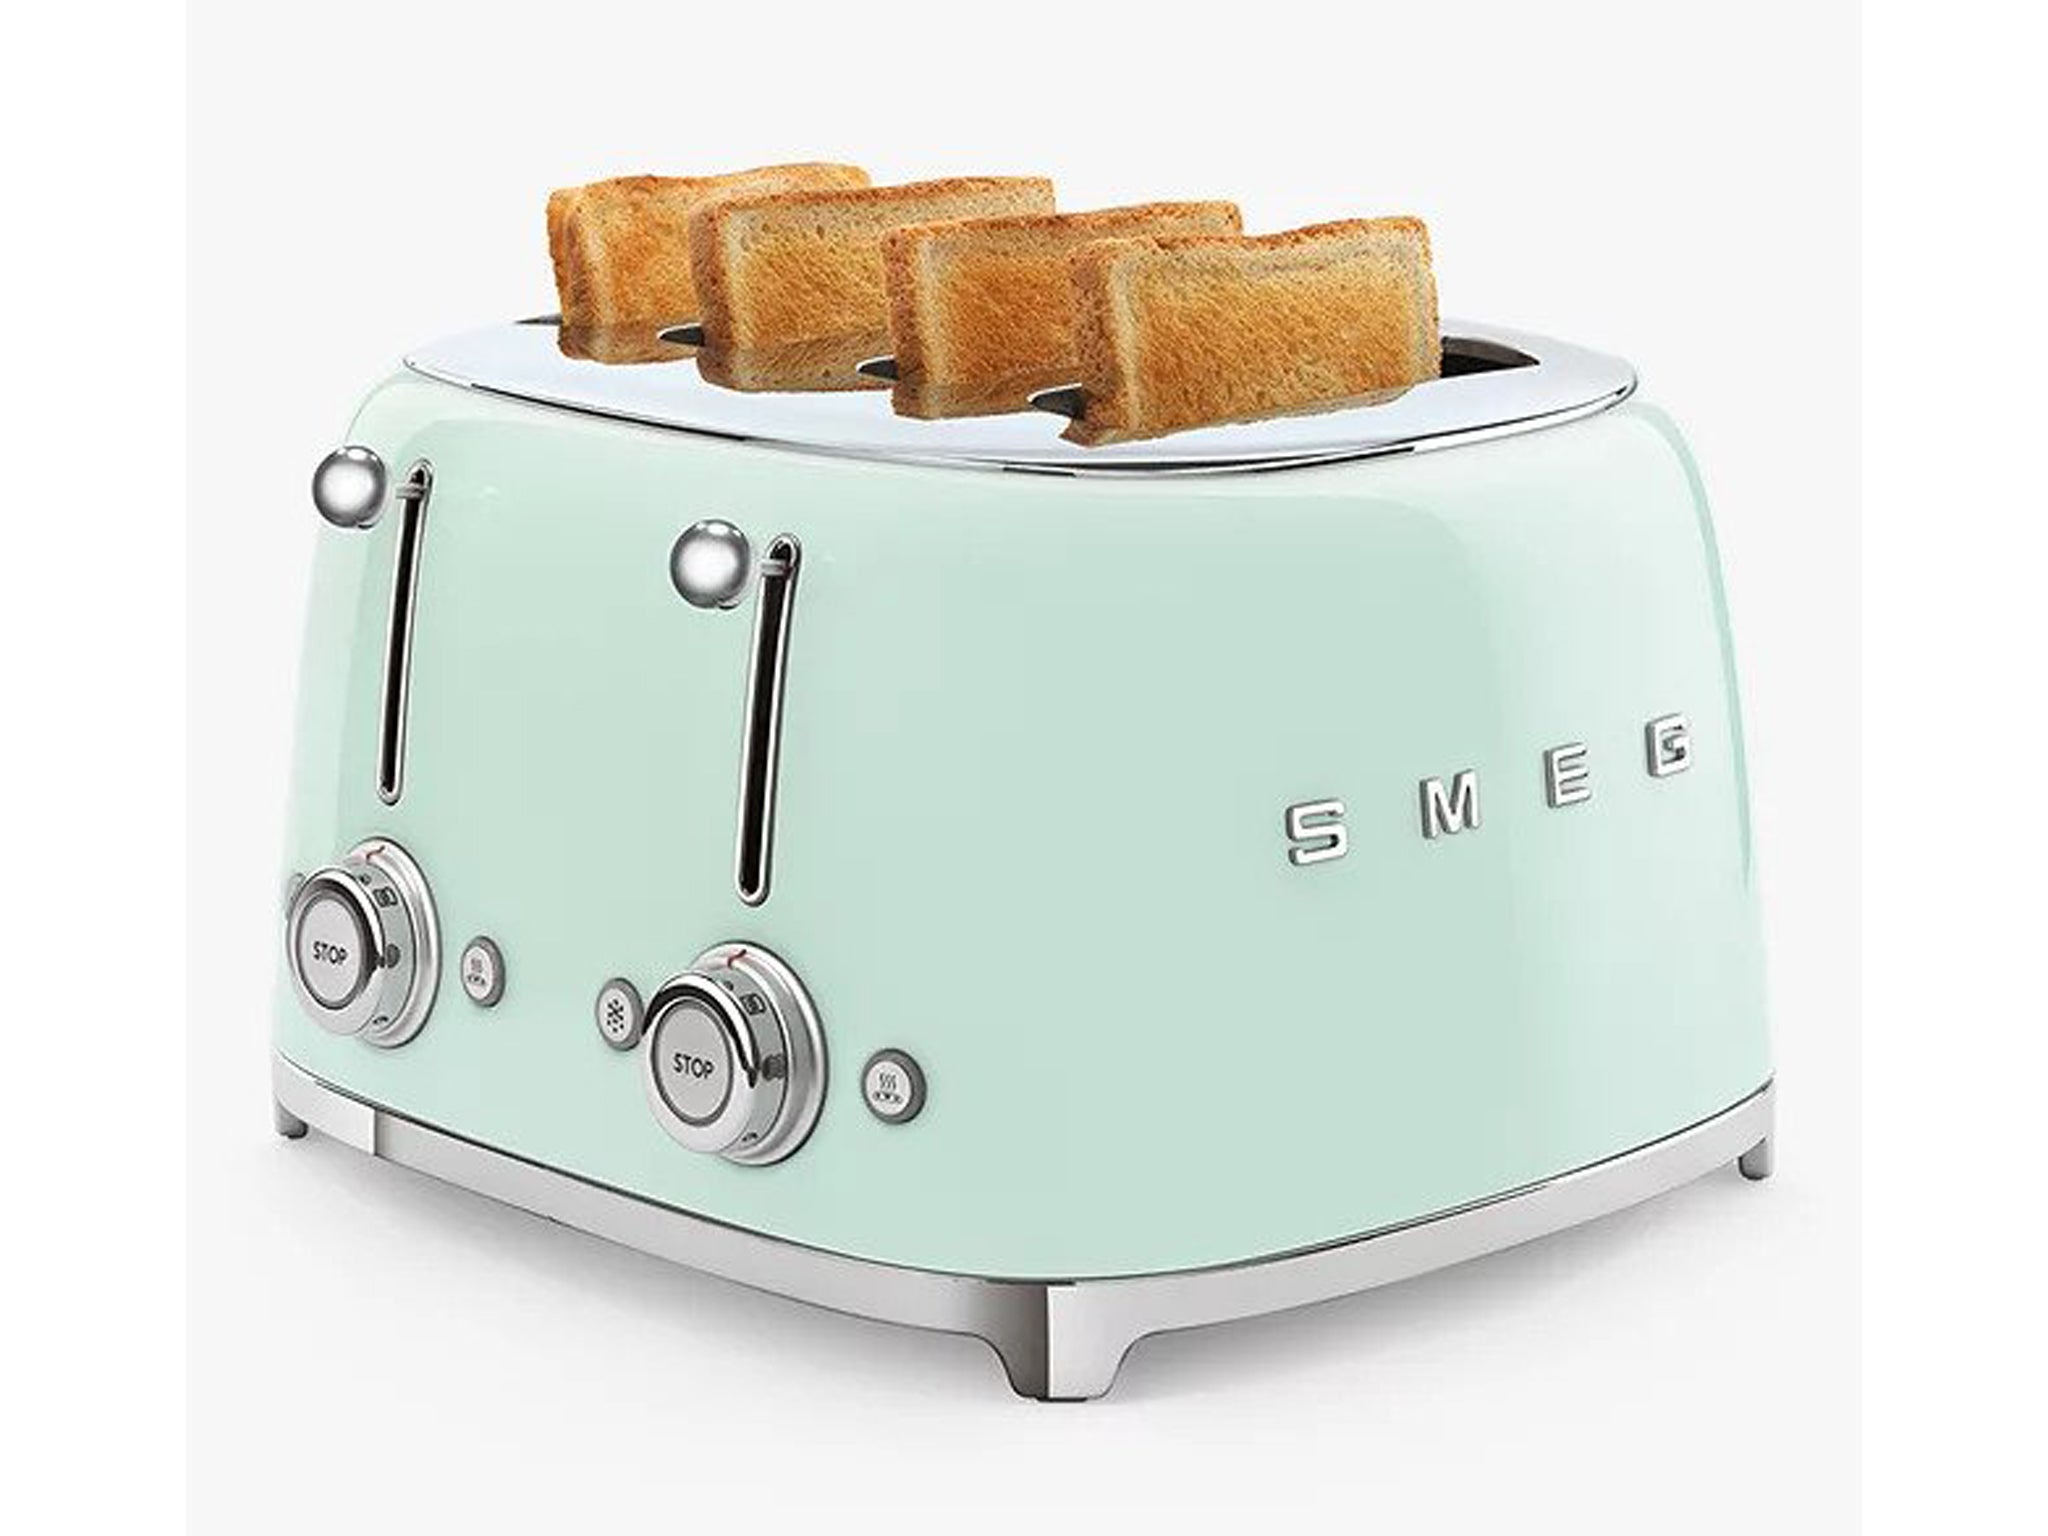 Smeg 4-slice toaster.jpg